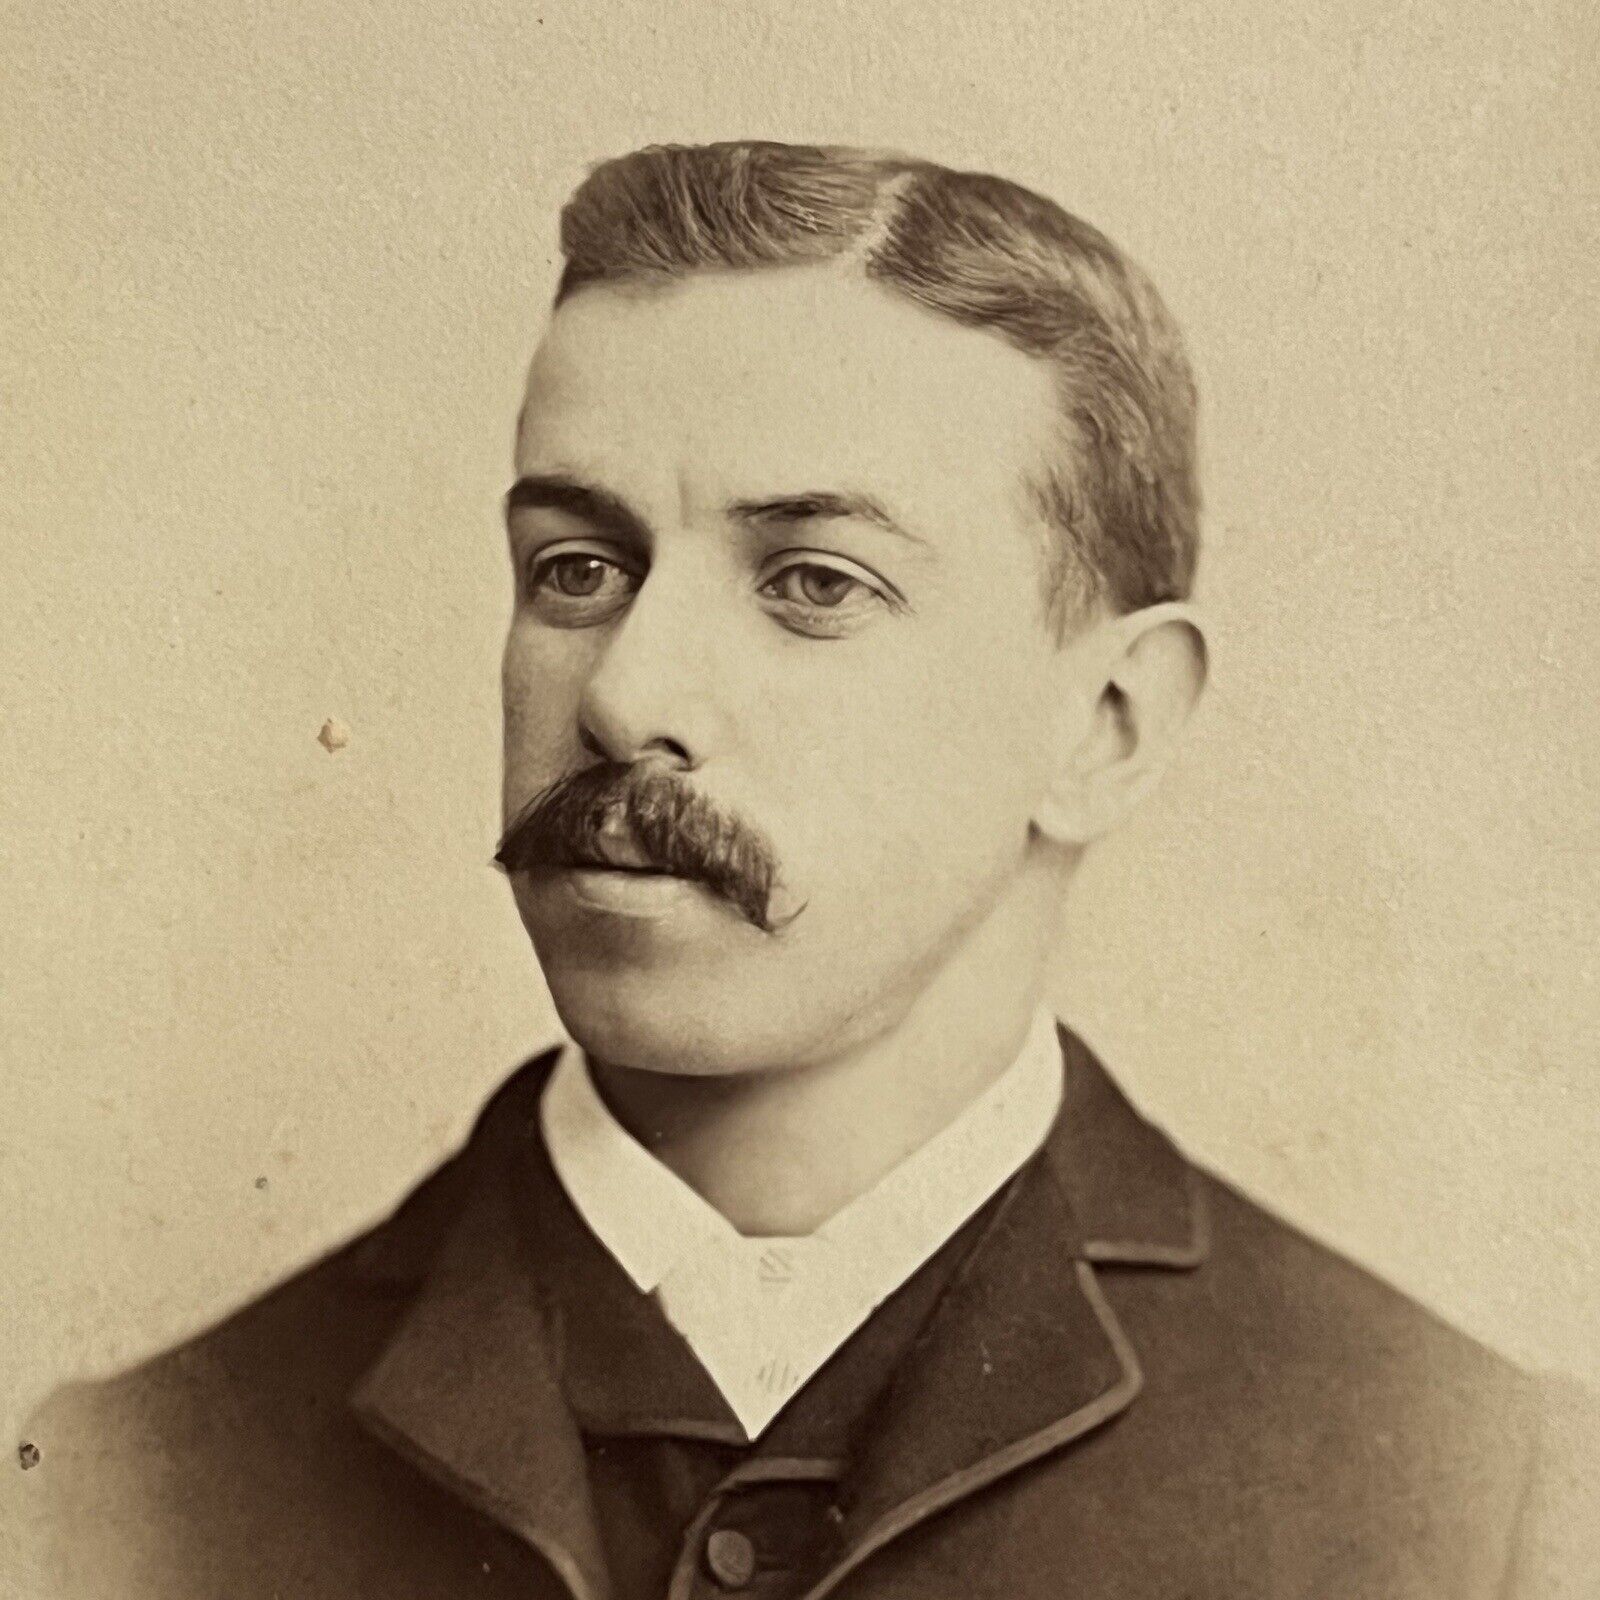 Antique Cabinet Card Photograph Charming Handsome Man Great Mustache Sunbury PA